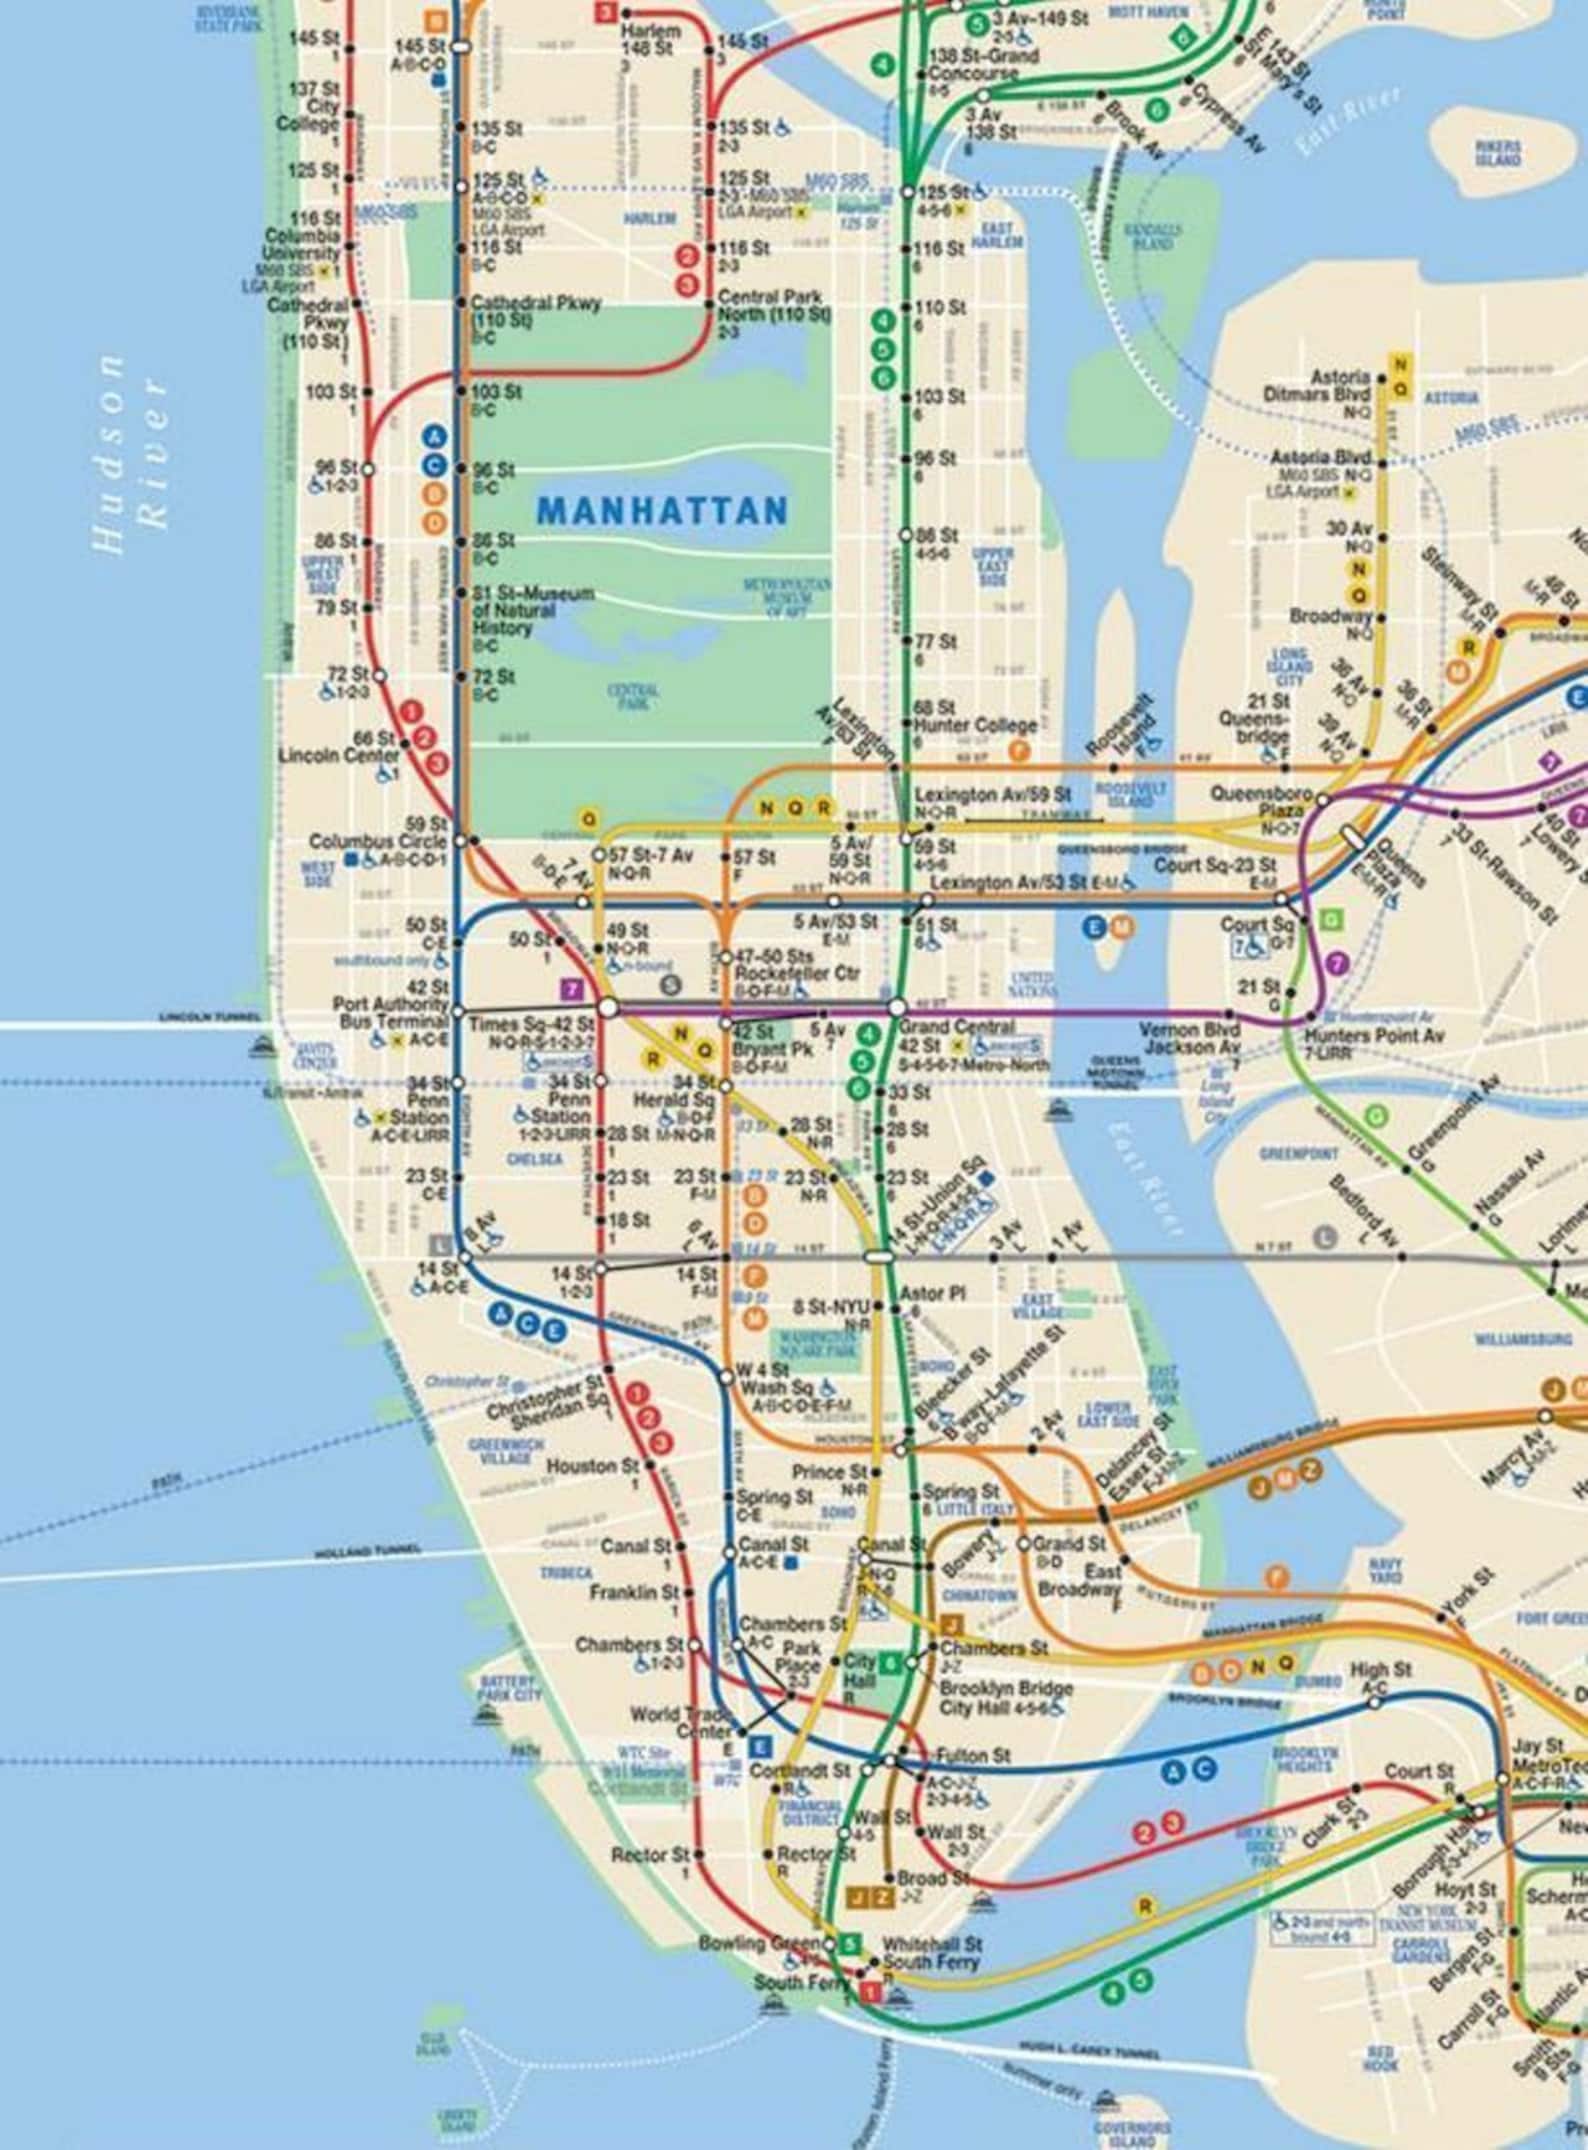 Nyc subway map - auctionaca